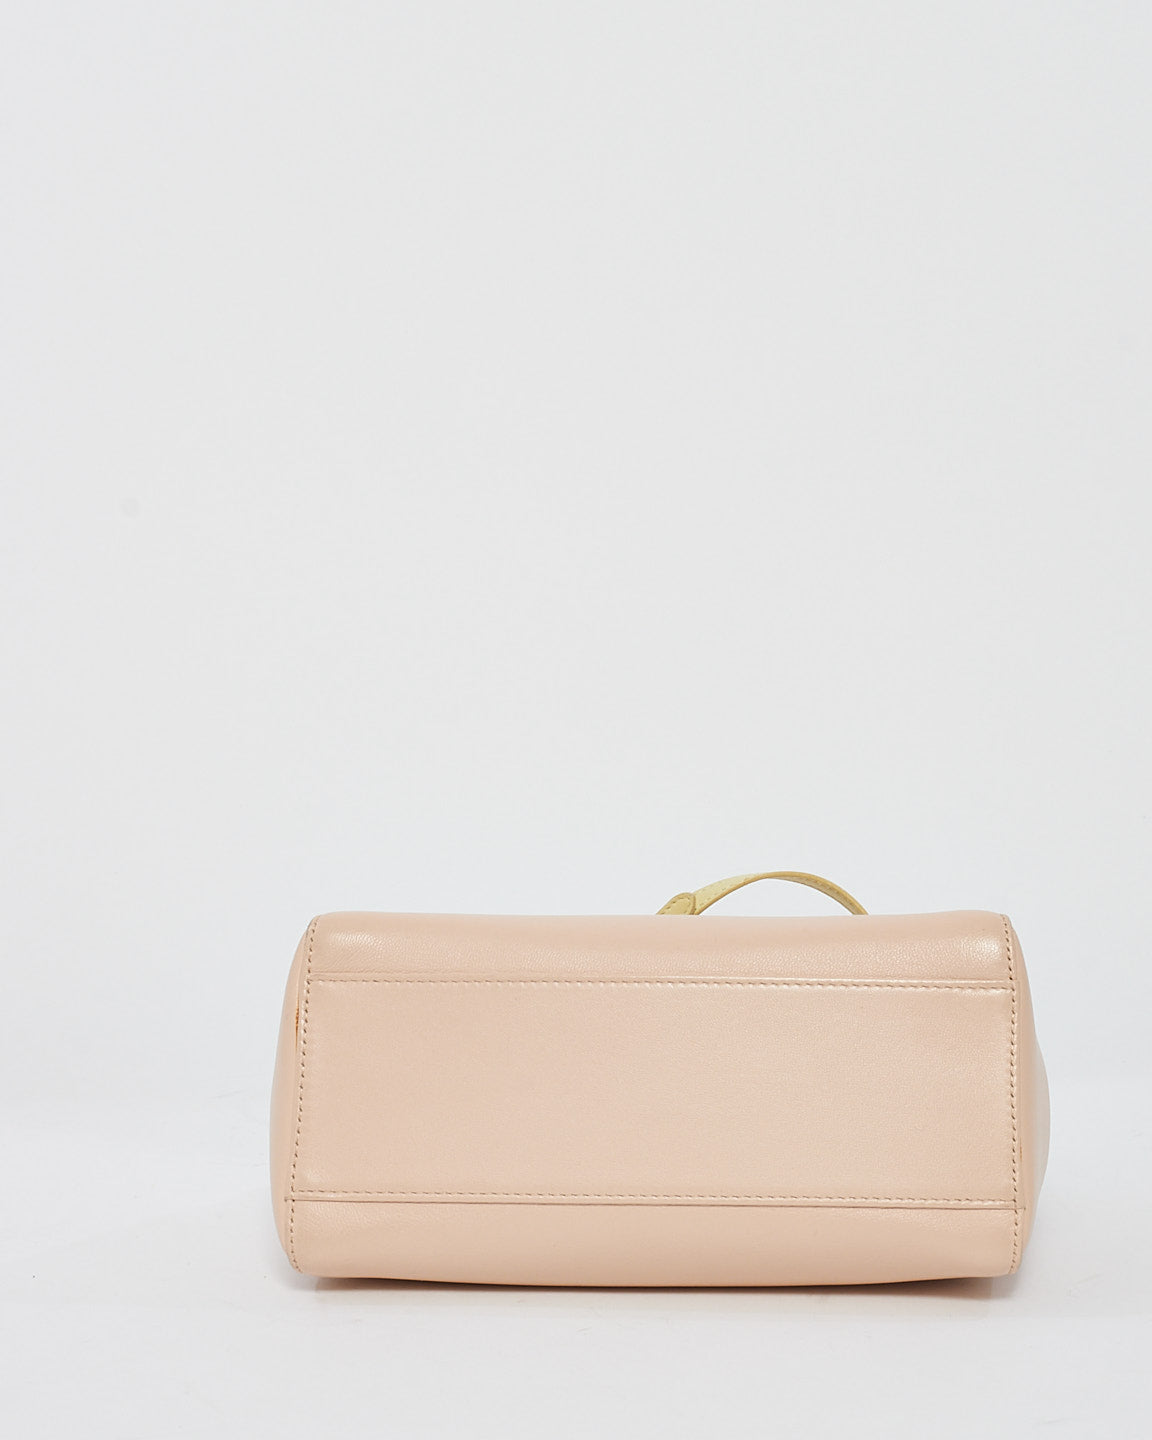 Fendi Light Pink Leather Mini Peekaboo Bag